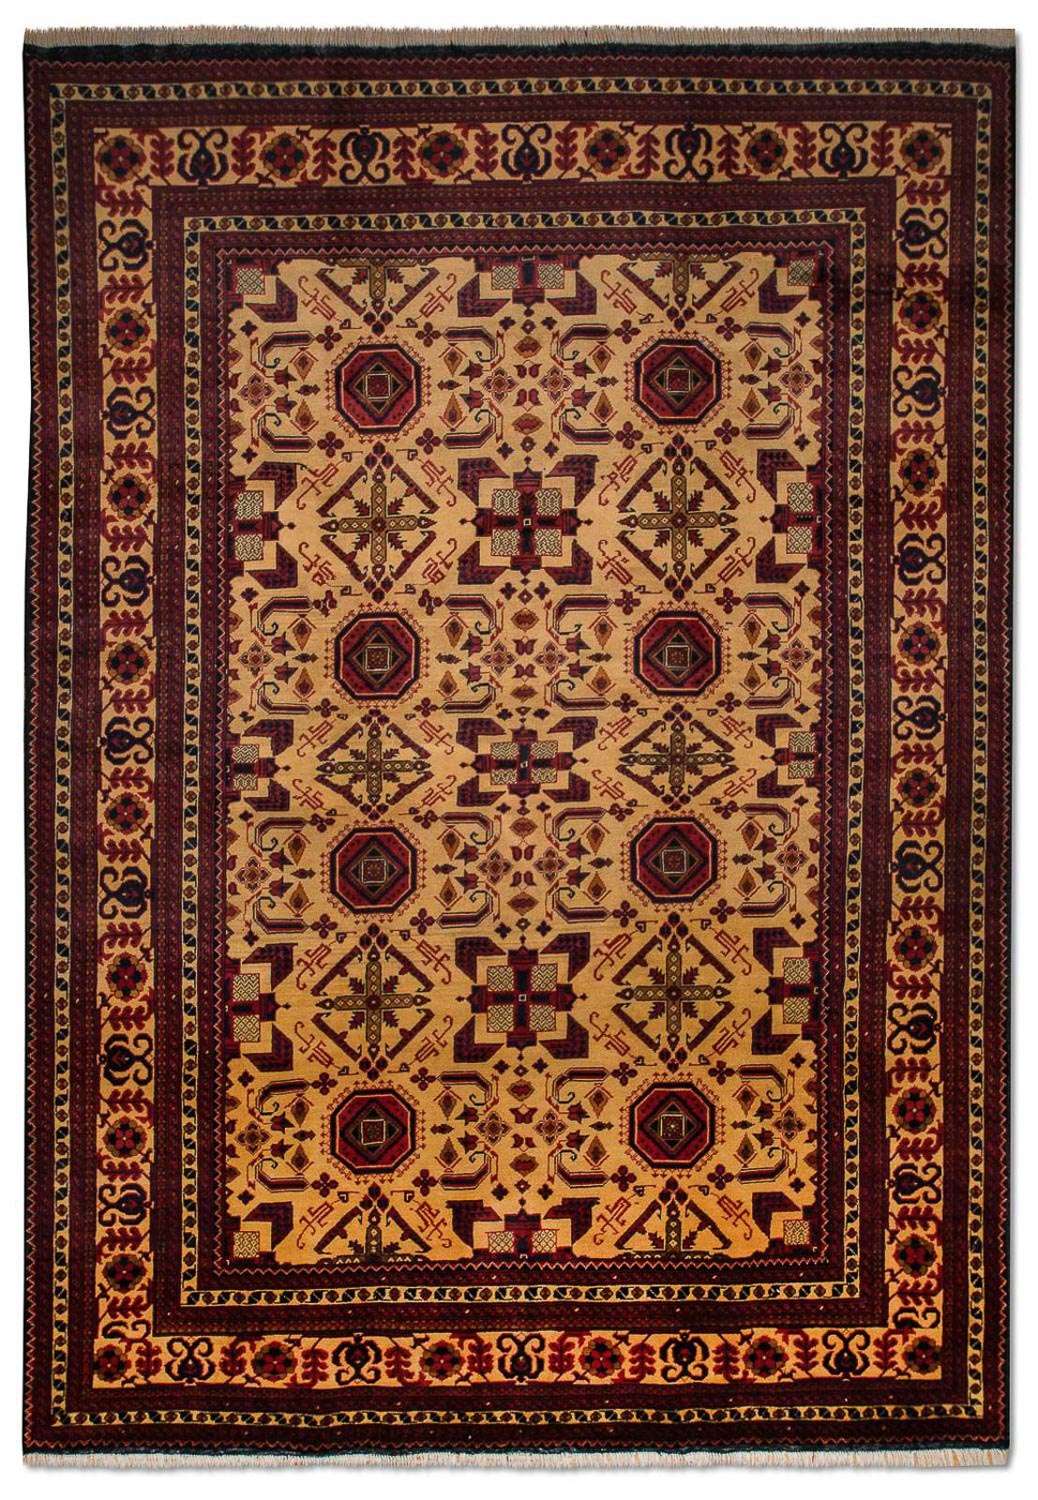 Tapis afghan - Hatschlu - 290 x 202 cm - jaune